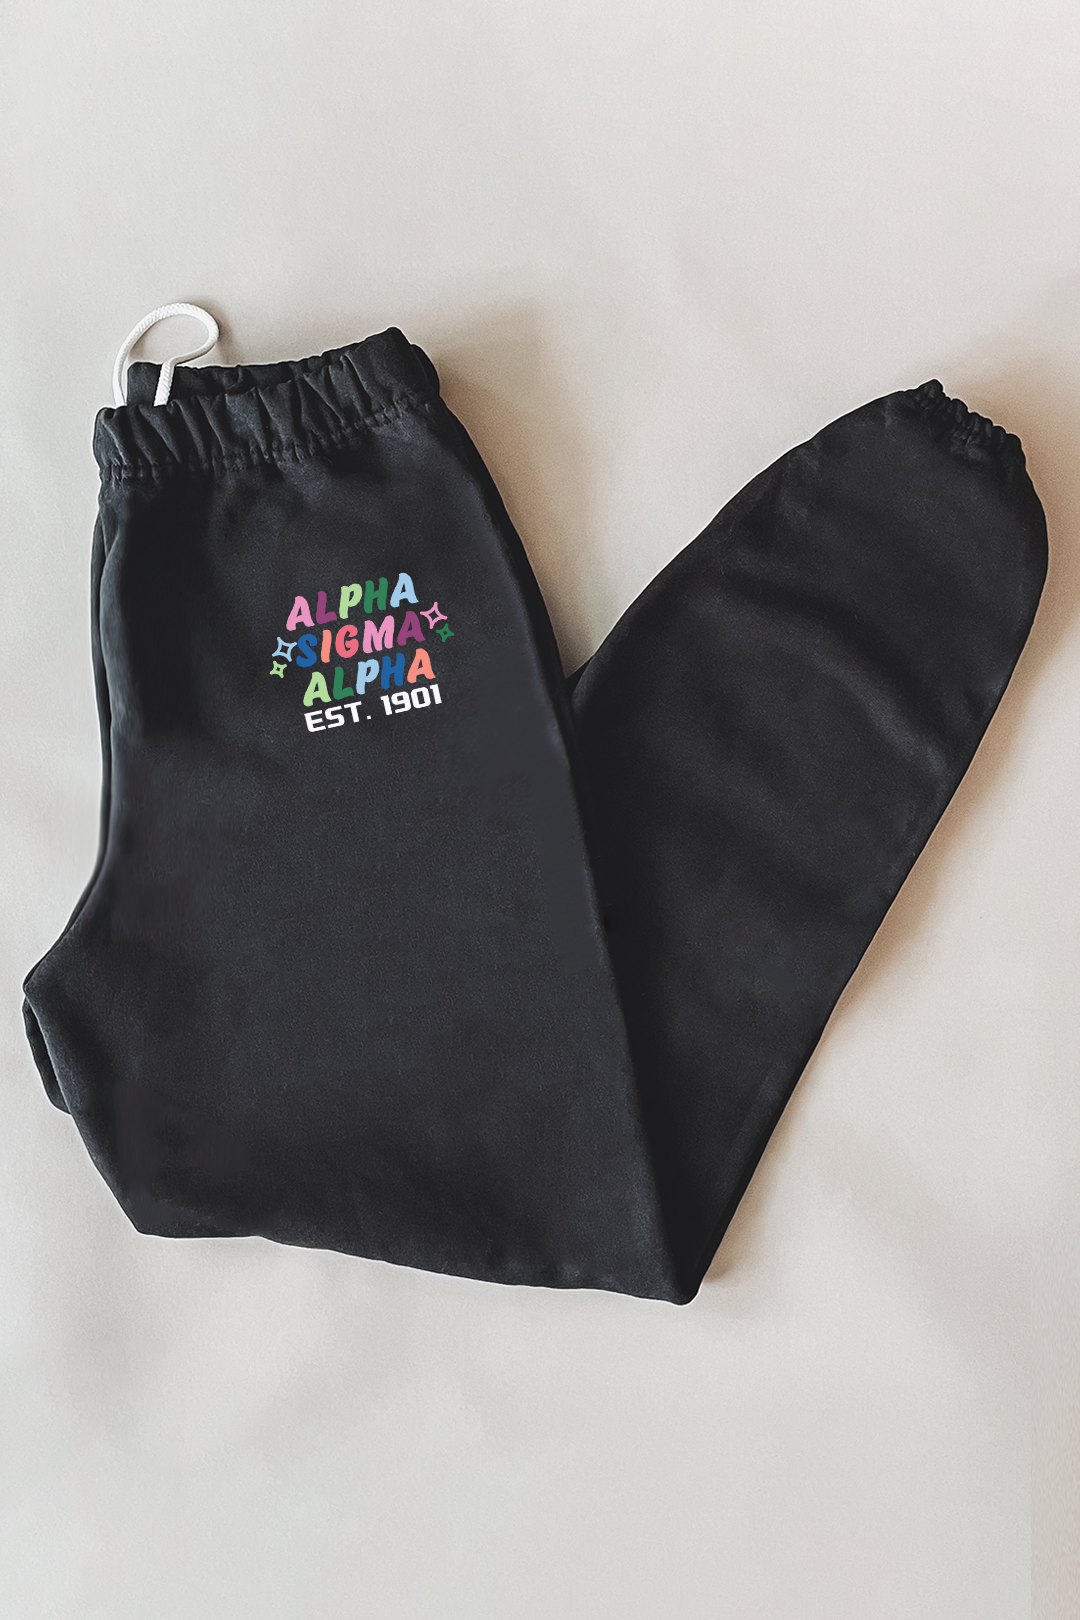 Black sweatpants - Alpha Sigma Alpha